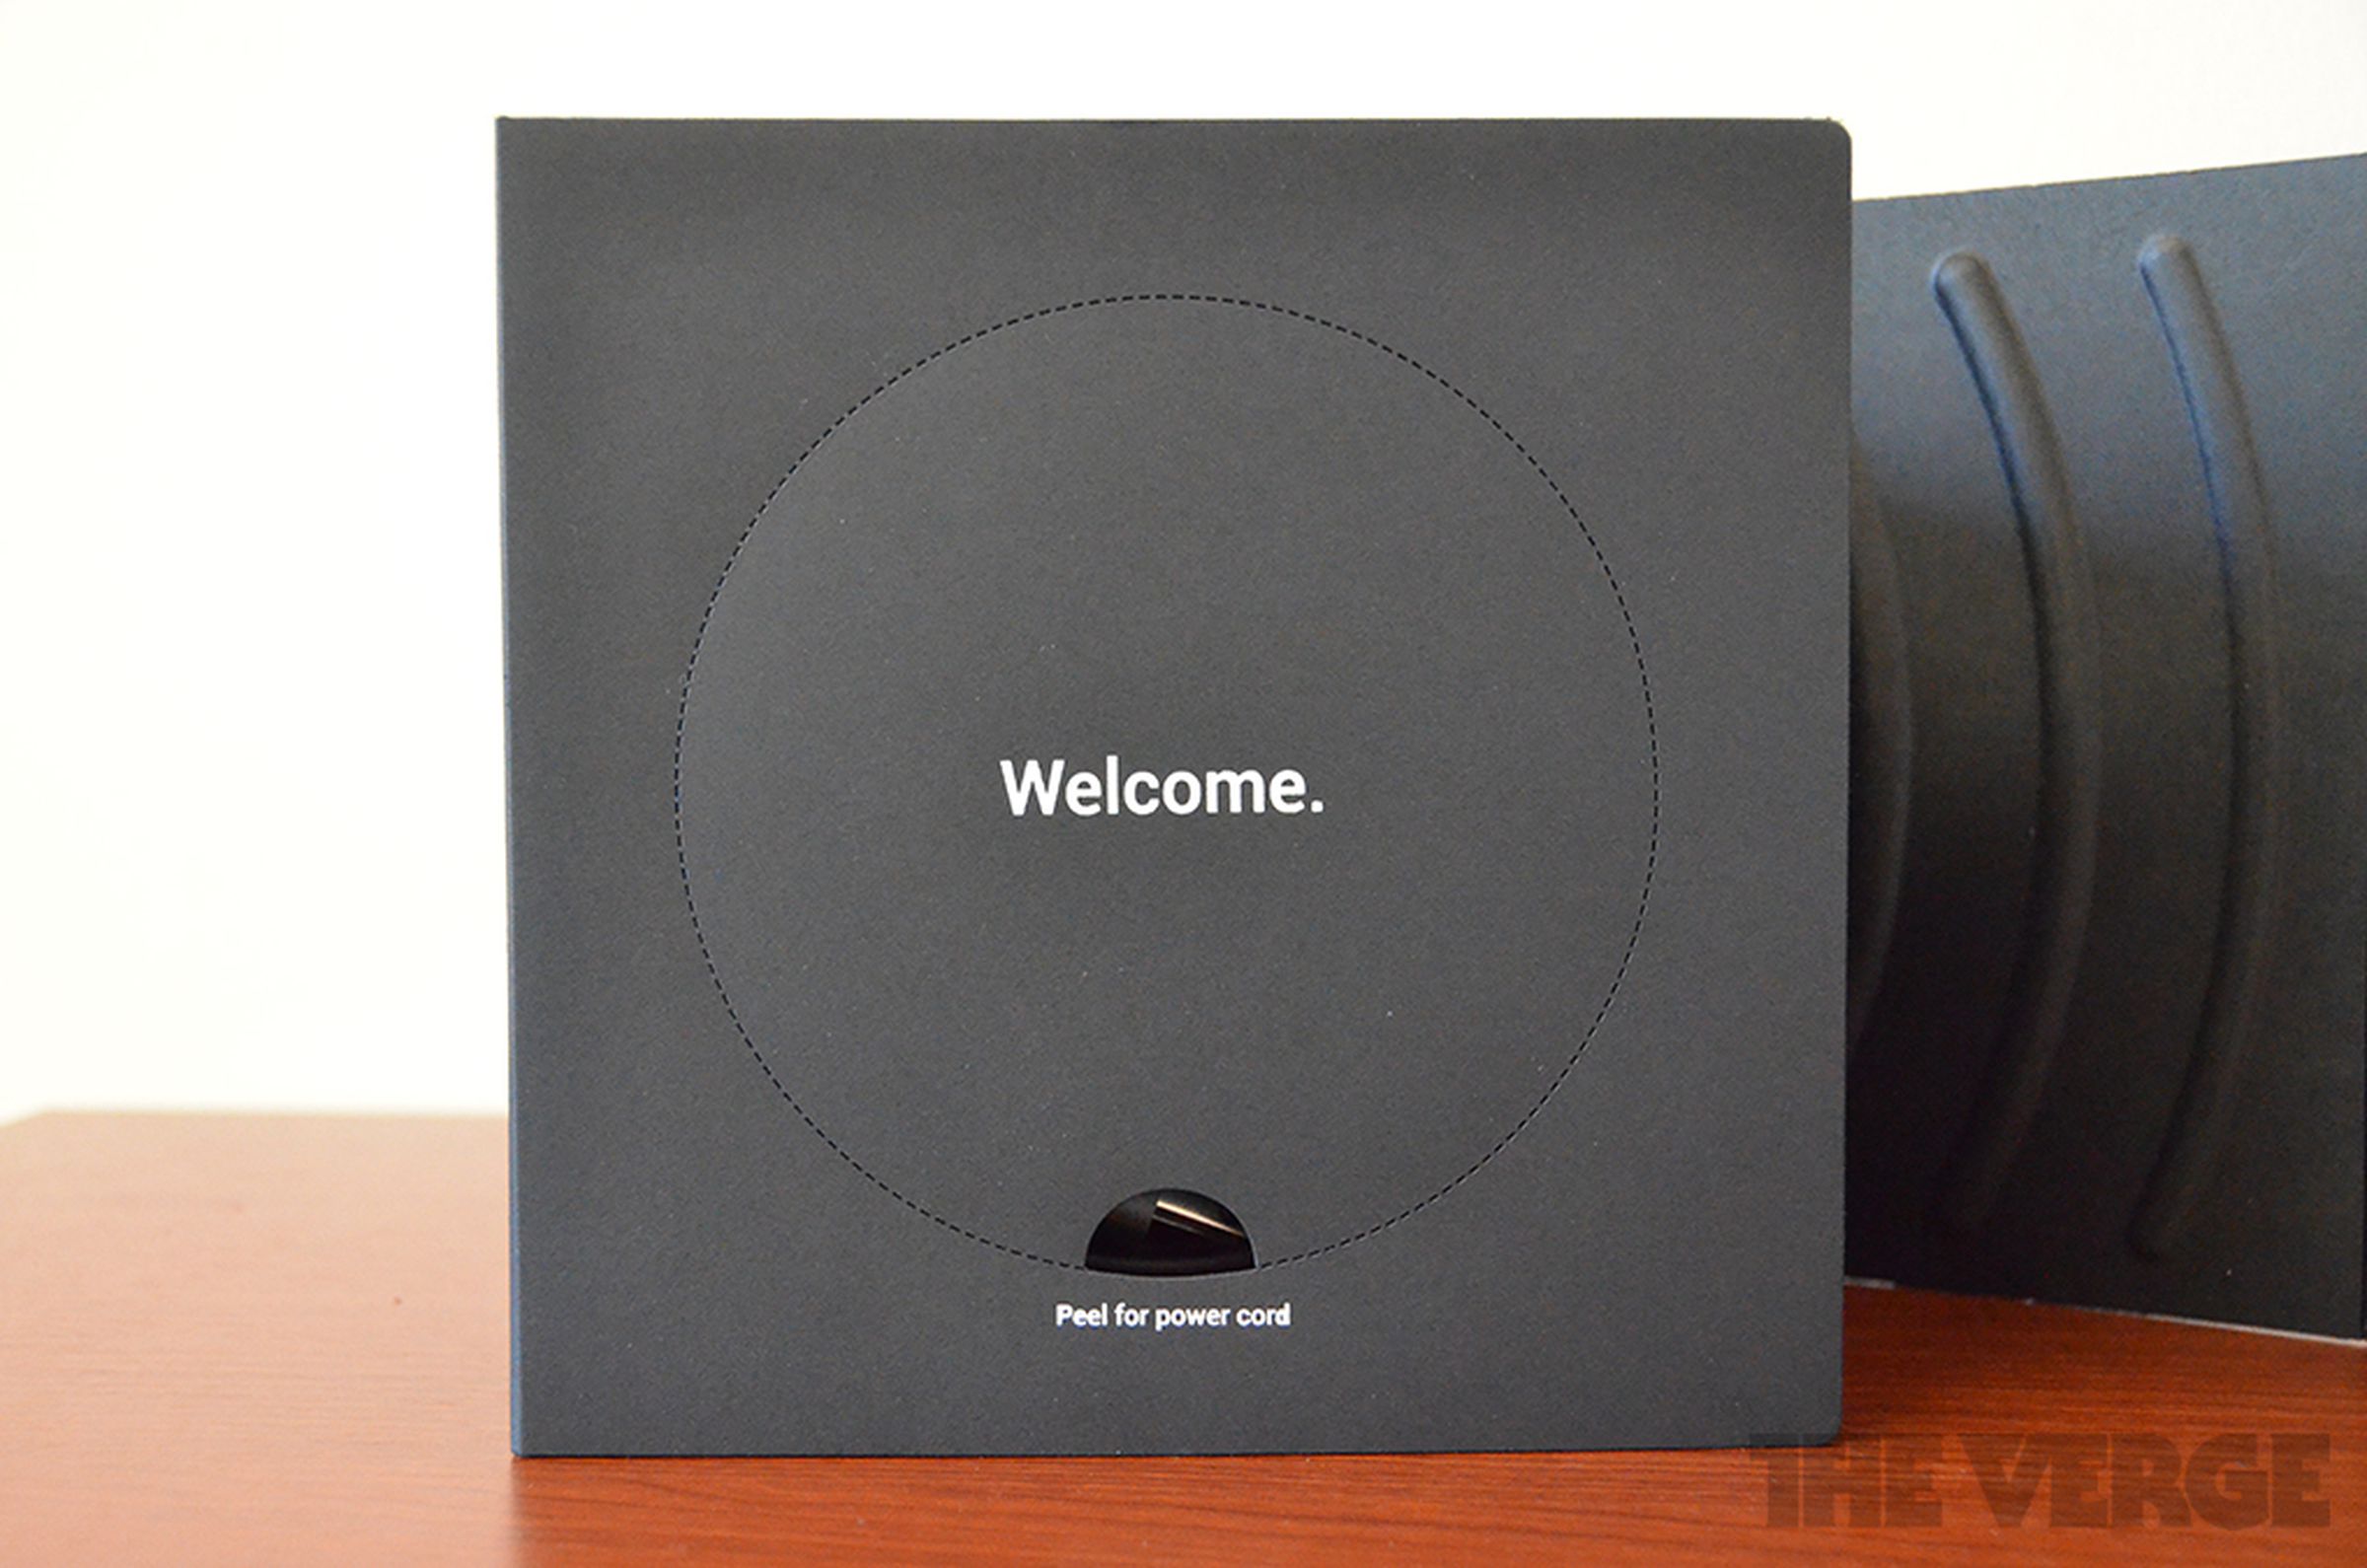 Google Nexus Q media streamer: first impressions photos